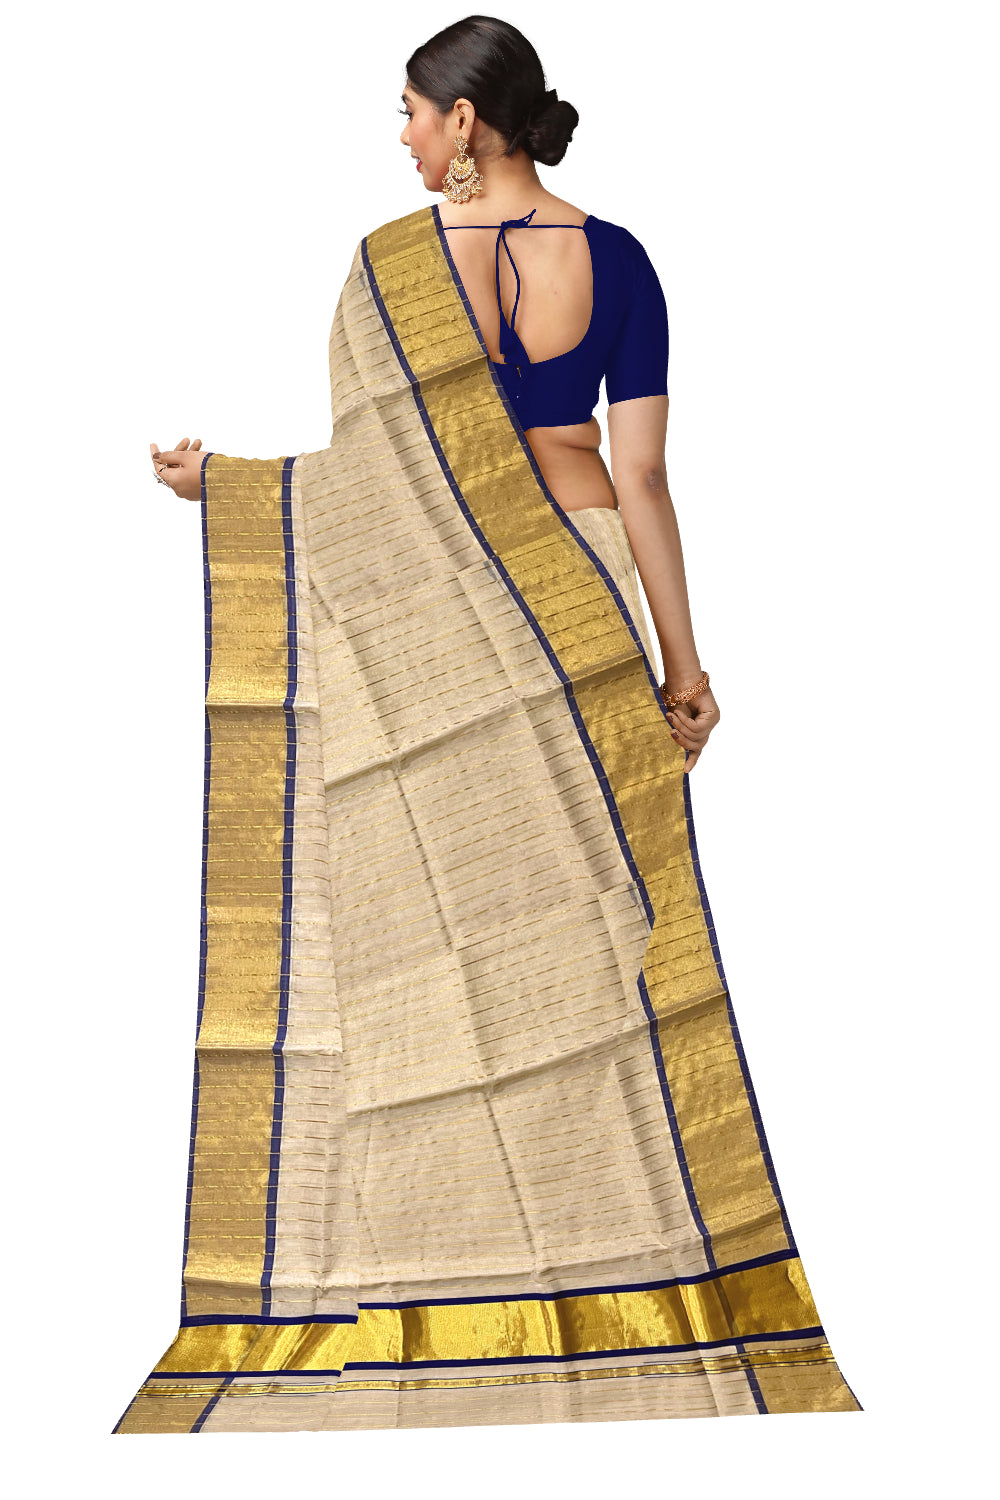 Southloom™ Premium Handloom Tissue Saree with Kasavu Lines Designs Across Body and Blue Border